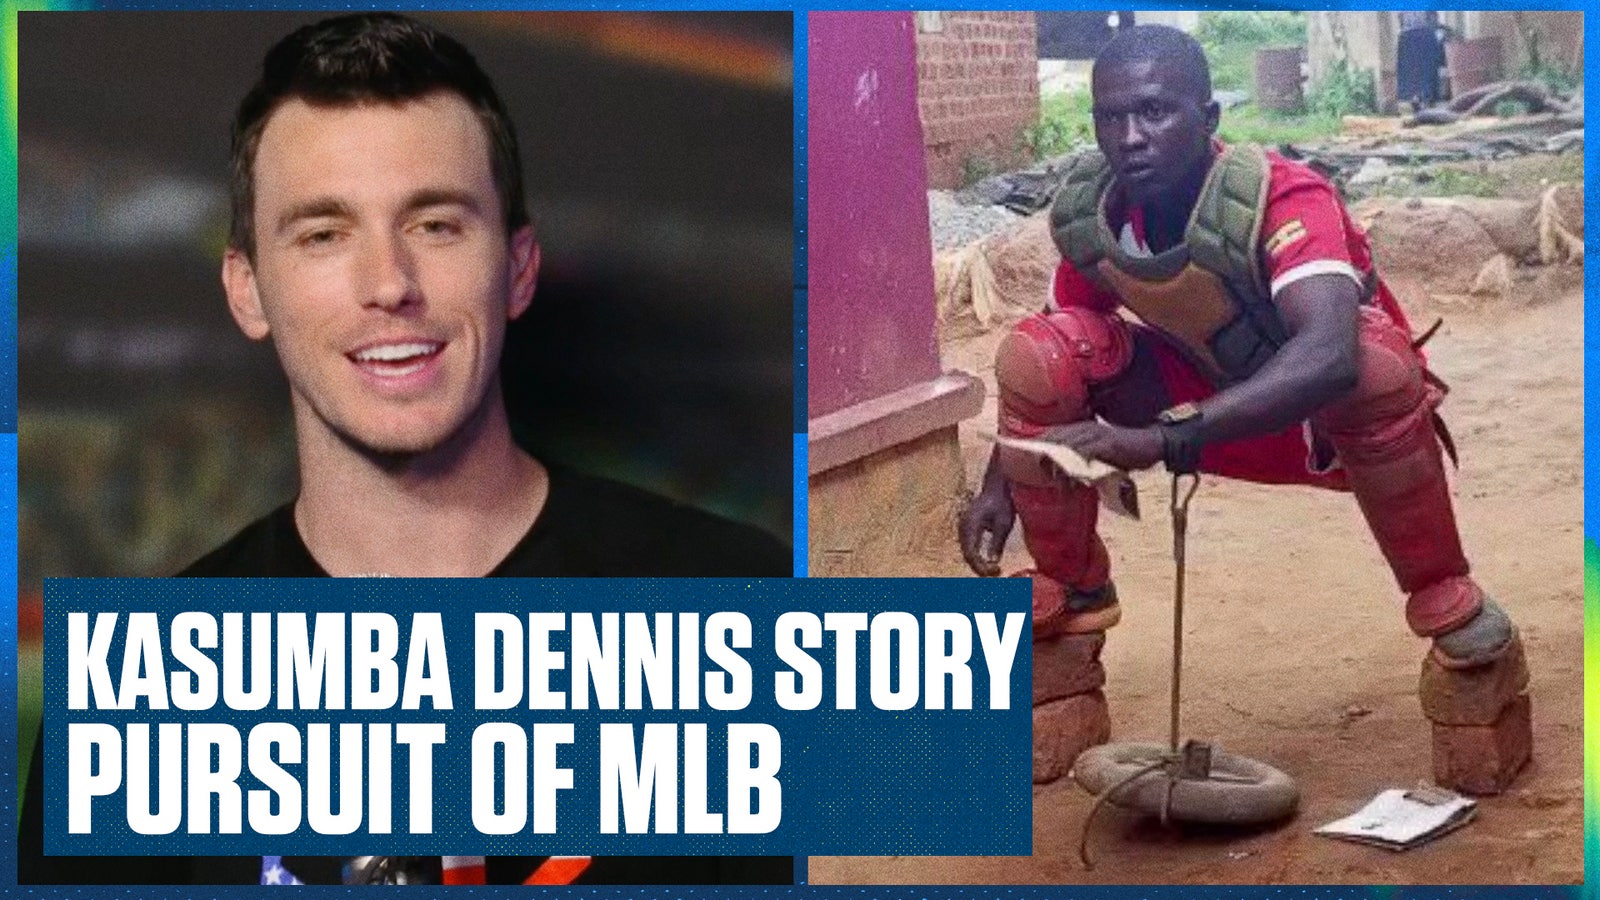 The remarkable story of Kasumba Dennis & his journey from Uganda to MLB hopeful